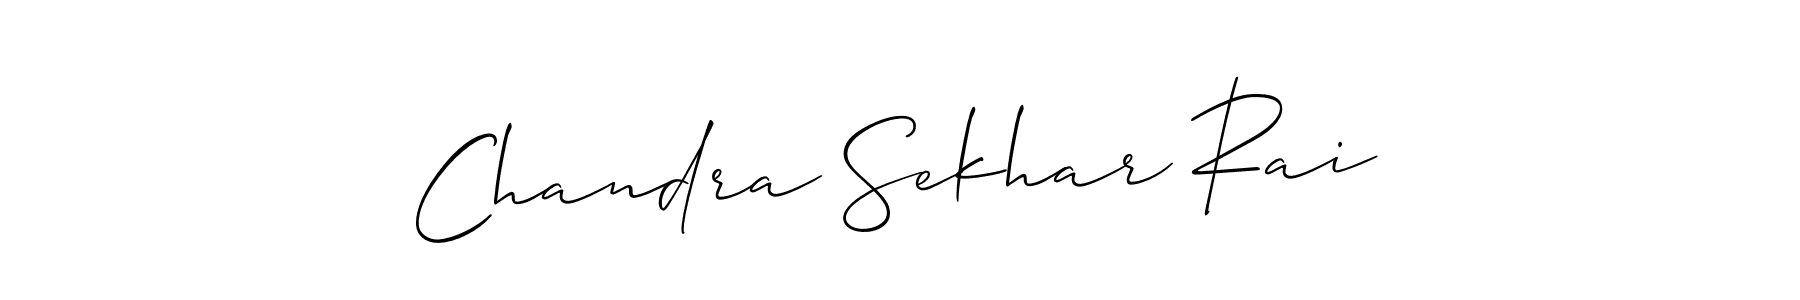 How to make Chandra Sekhar Rai signature? Allison_Script is a professional autograph style. Create handwritten signature for Chandra Sekhar Rai name. Chandra Sekhar Rai signature style 2 images and pictures png